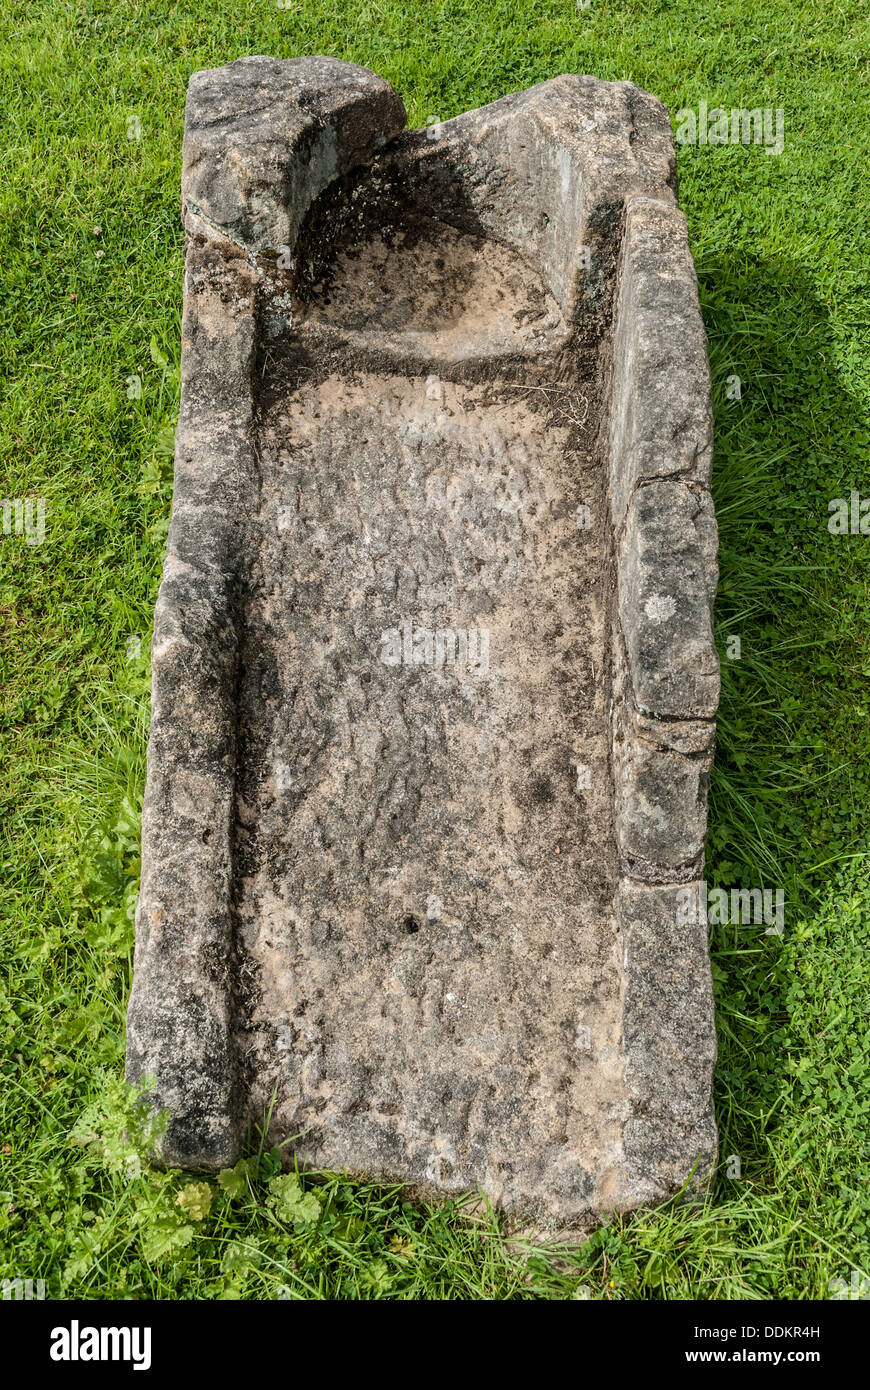 Monastic stone coffin found at Norton Priory, Cheshire. Stock Photo